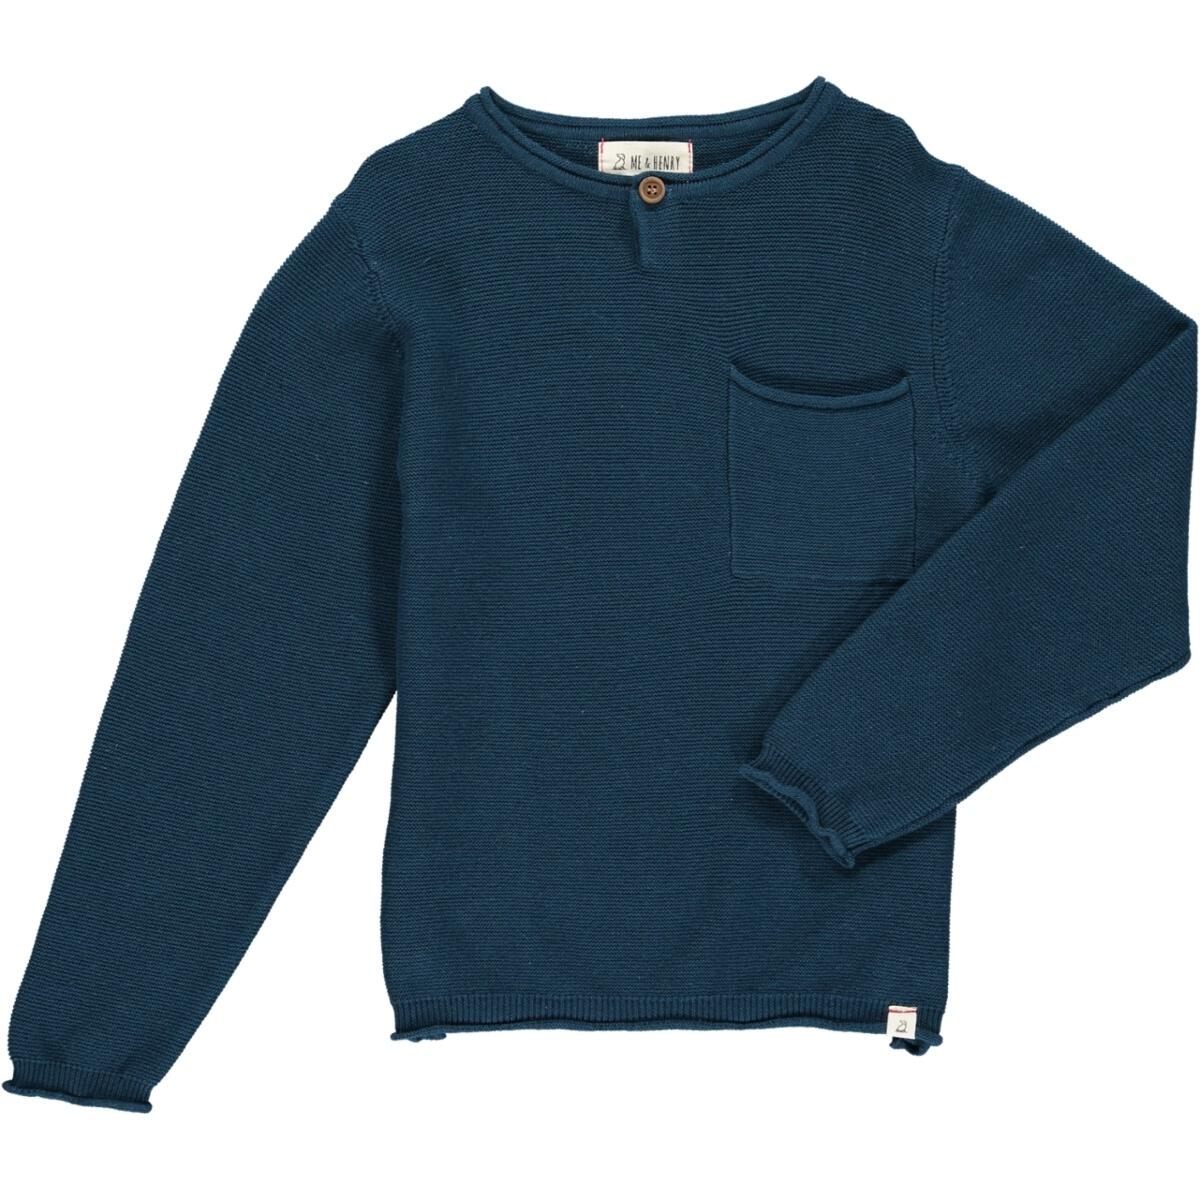 Me & Henry - Dayton Sweater - Blue - LAST ONE - 12Y